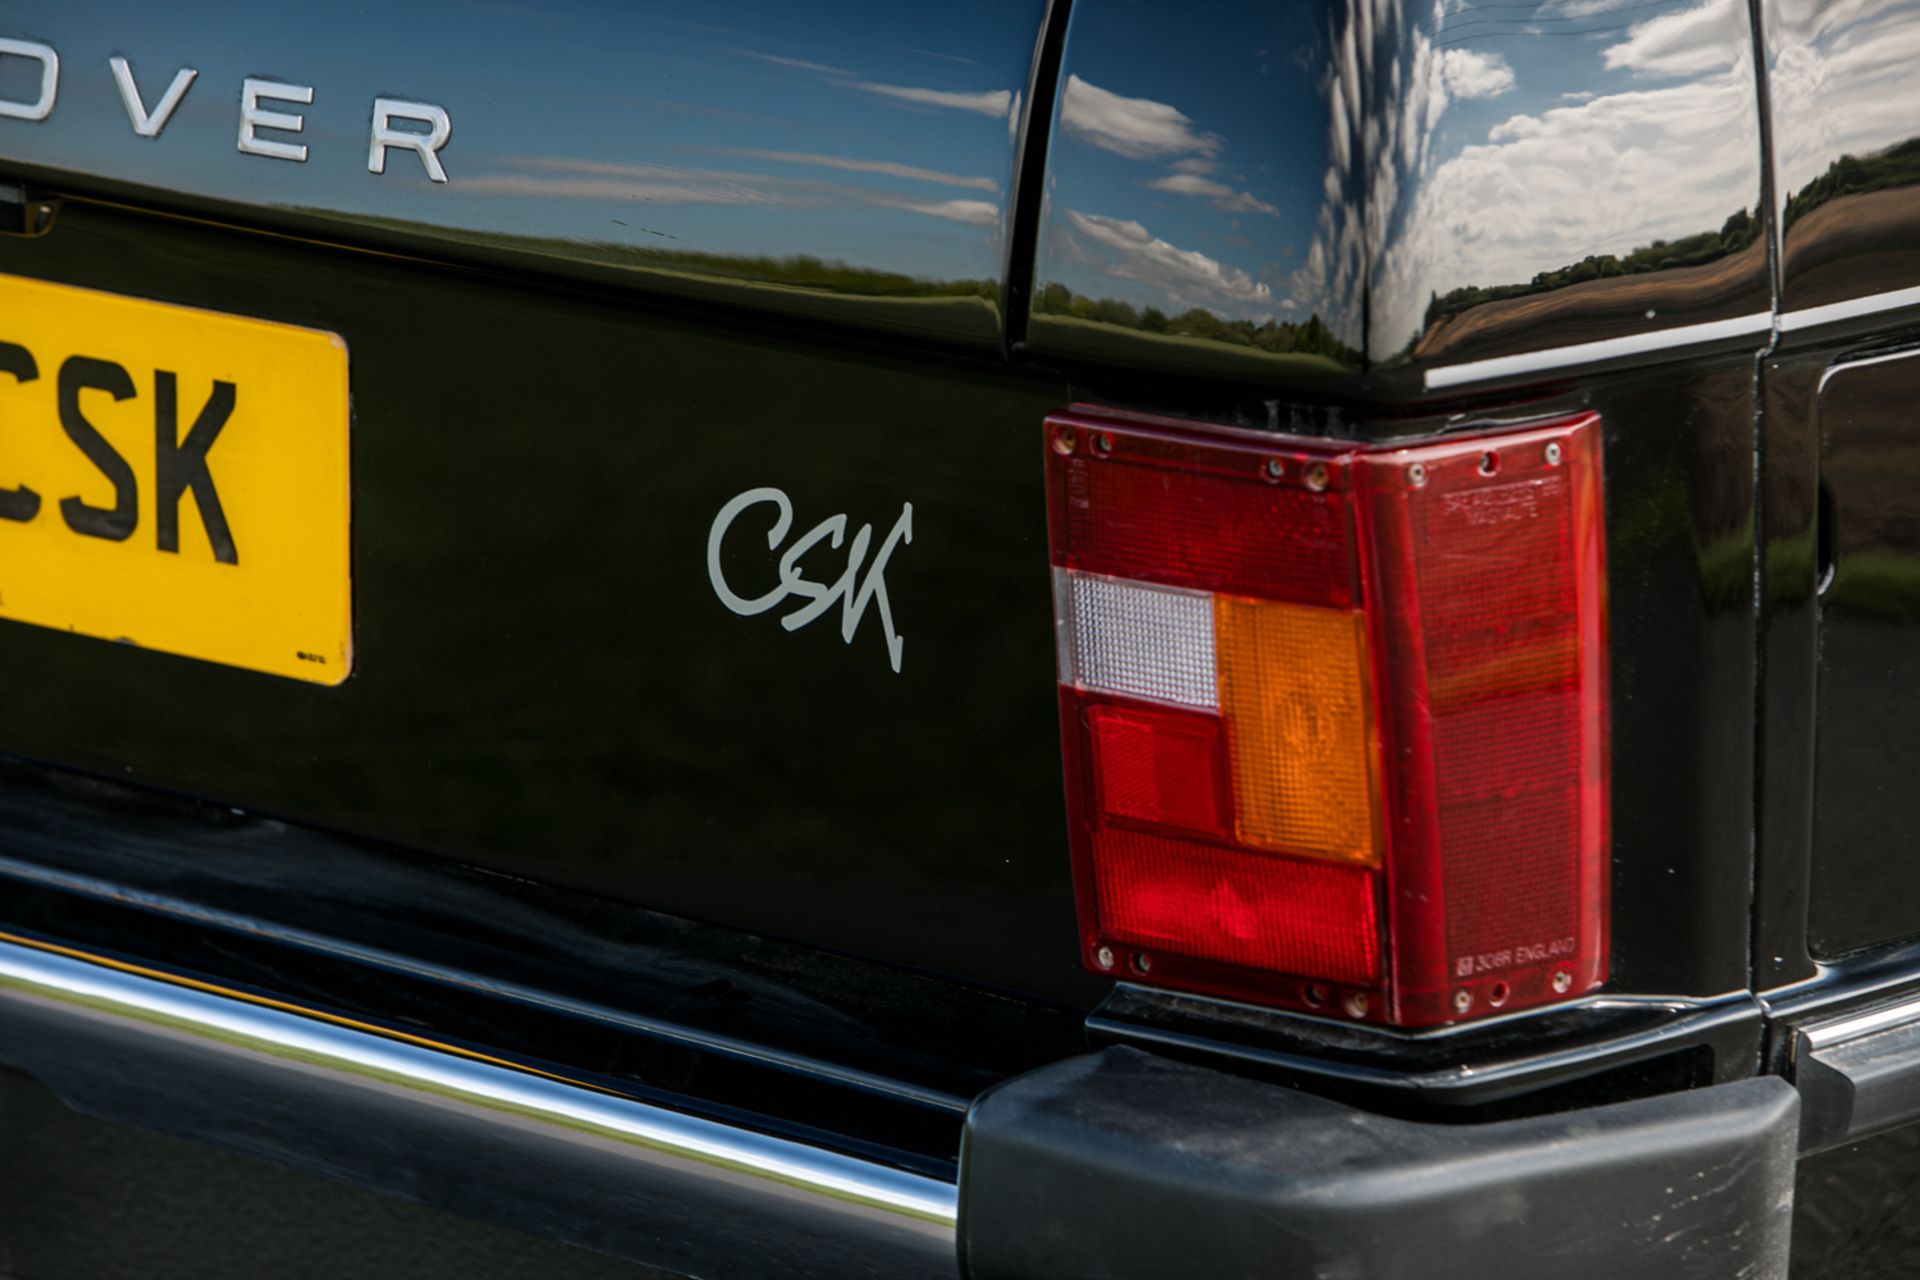 1991 Range Rover CSK - Image 24 of 27